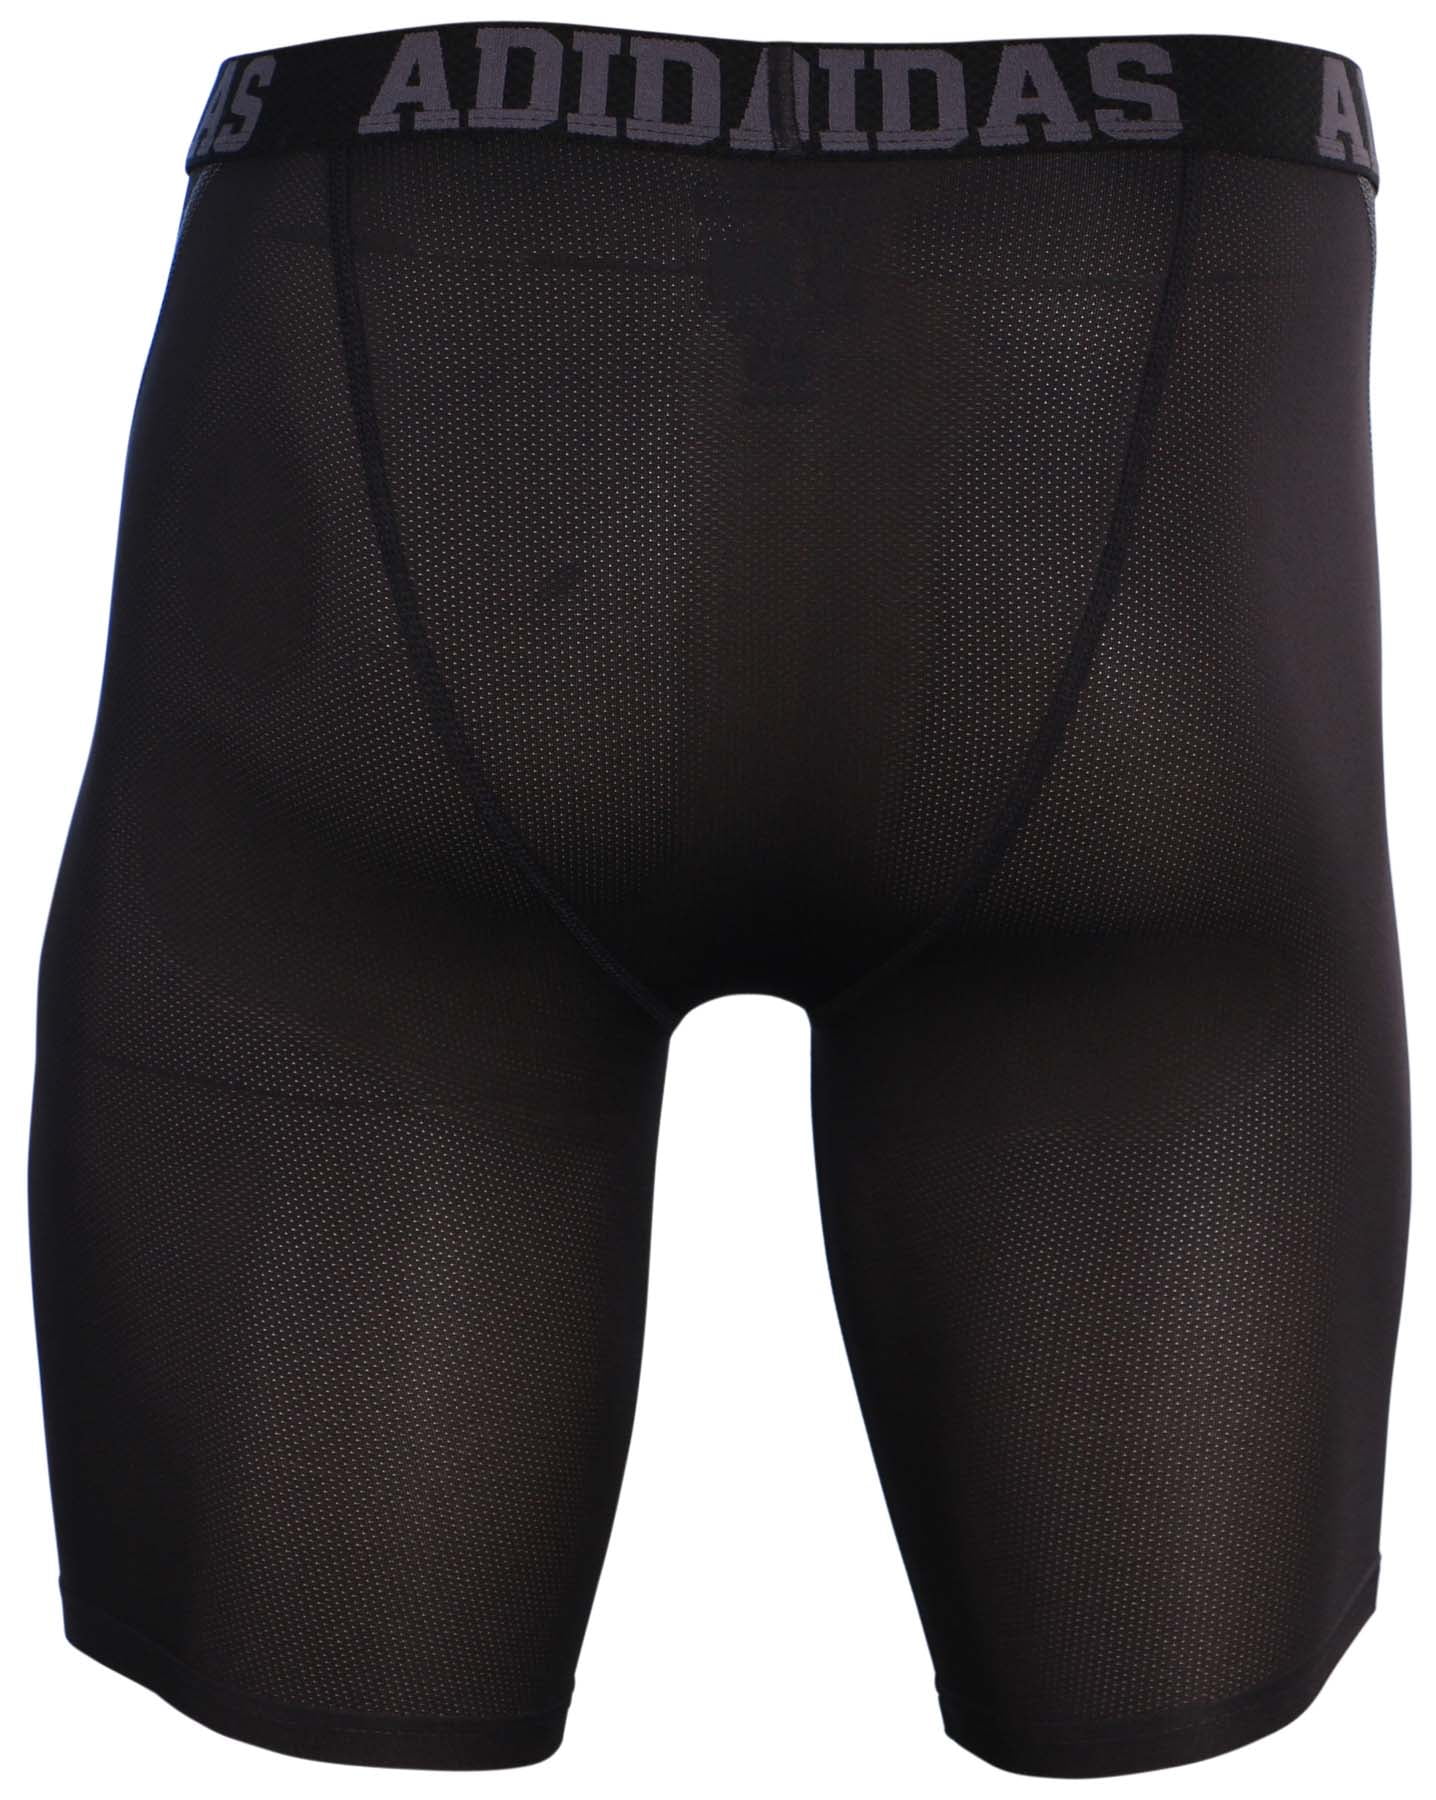 Adidas Men's Clima Cool 9 Midway Underwear-Black